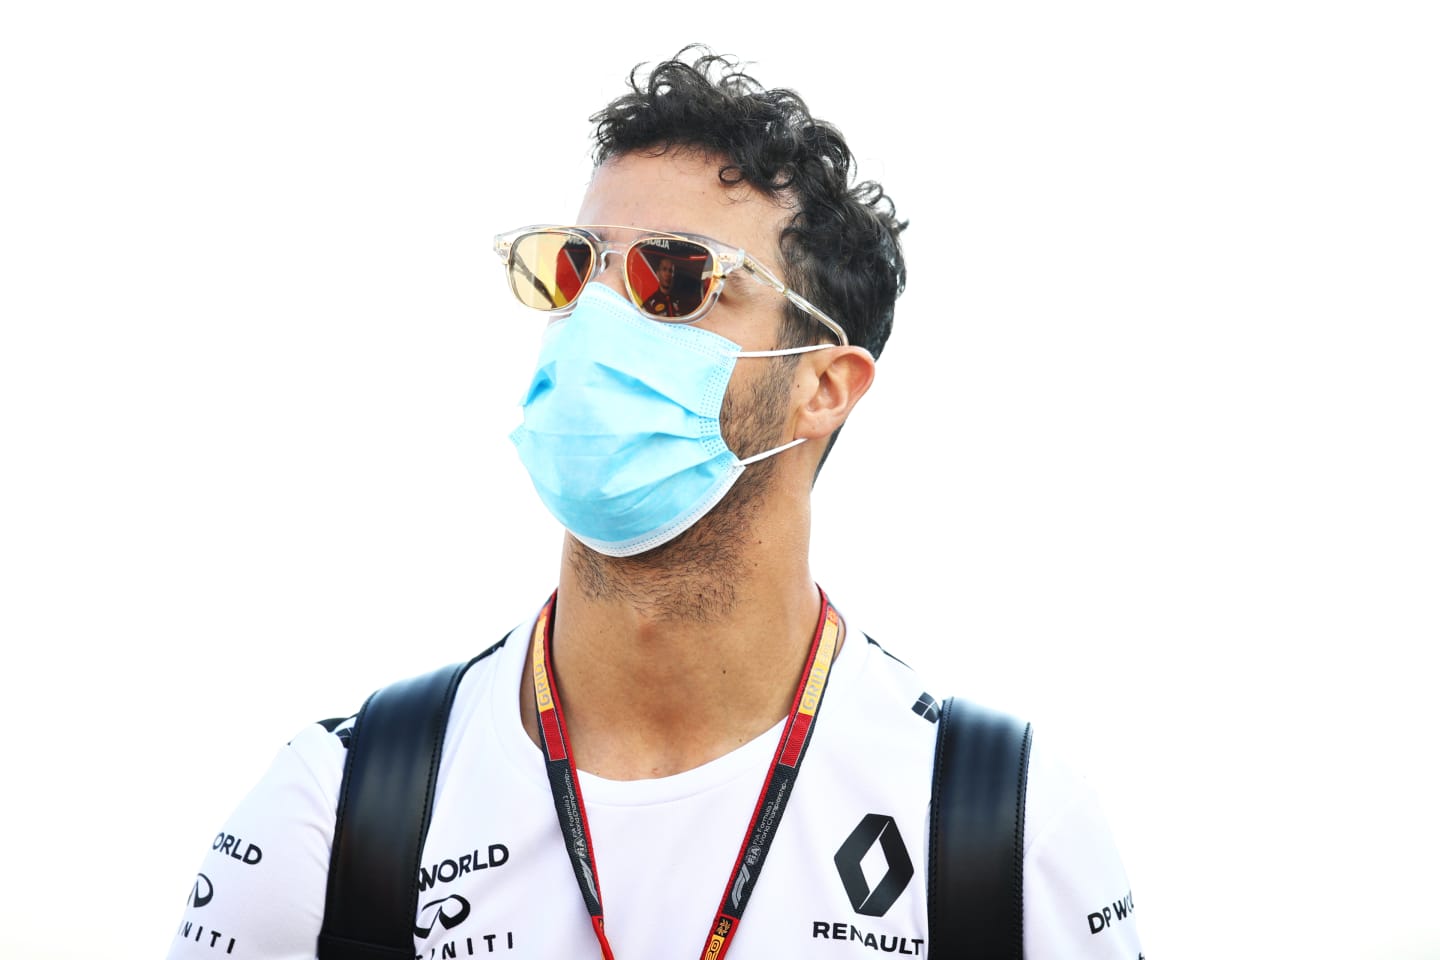 BARCELONA, SPAIN - AUGUST 14: Daniel Ricciardo of Australia and Renault Sport F1 arrives in the